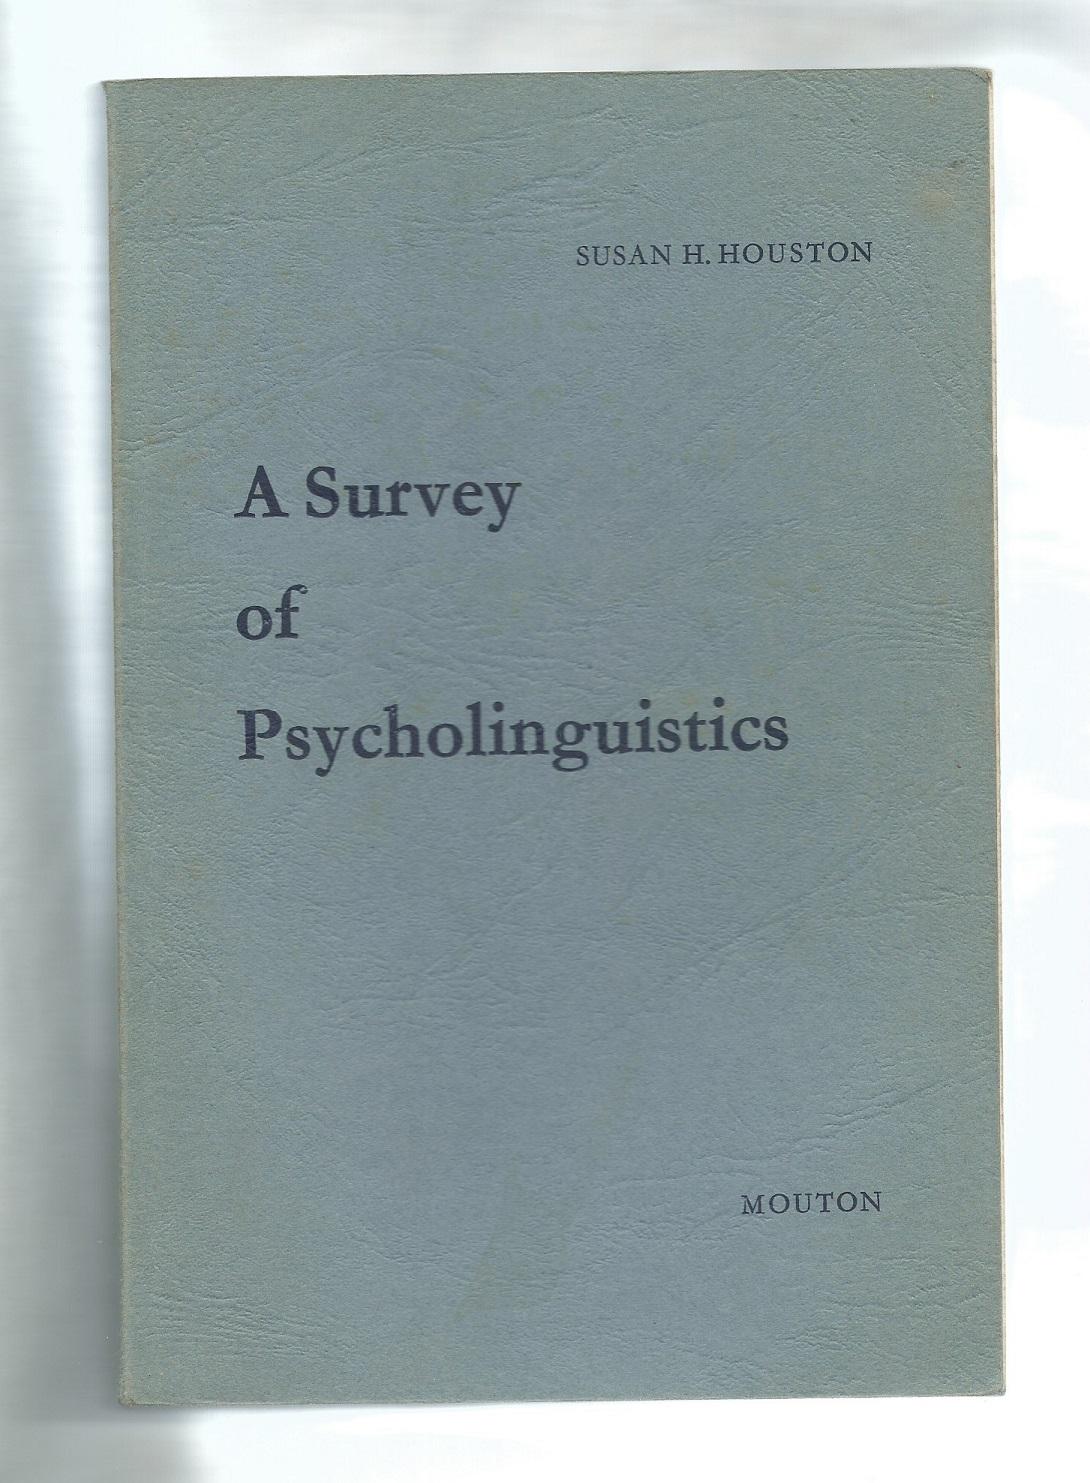 A Survey of Psycholinguistics.